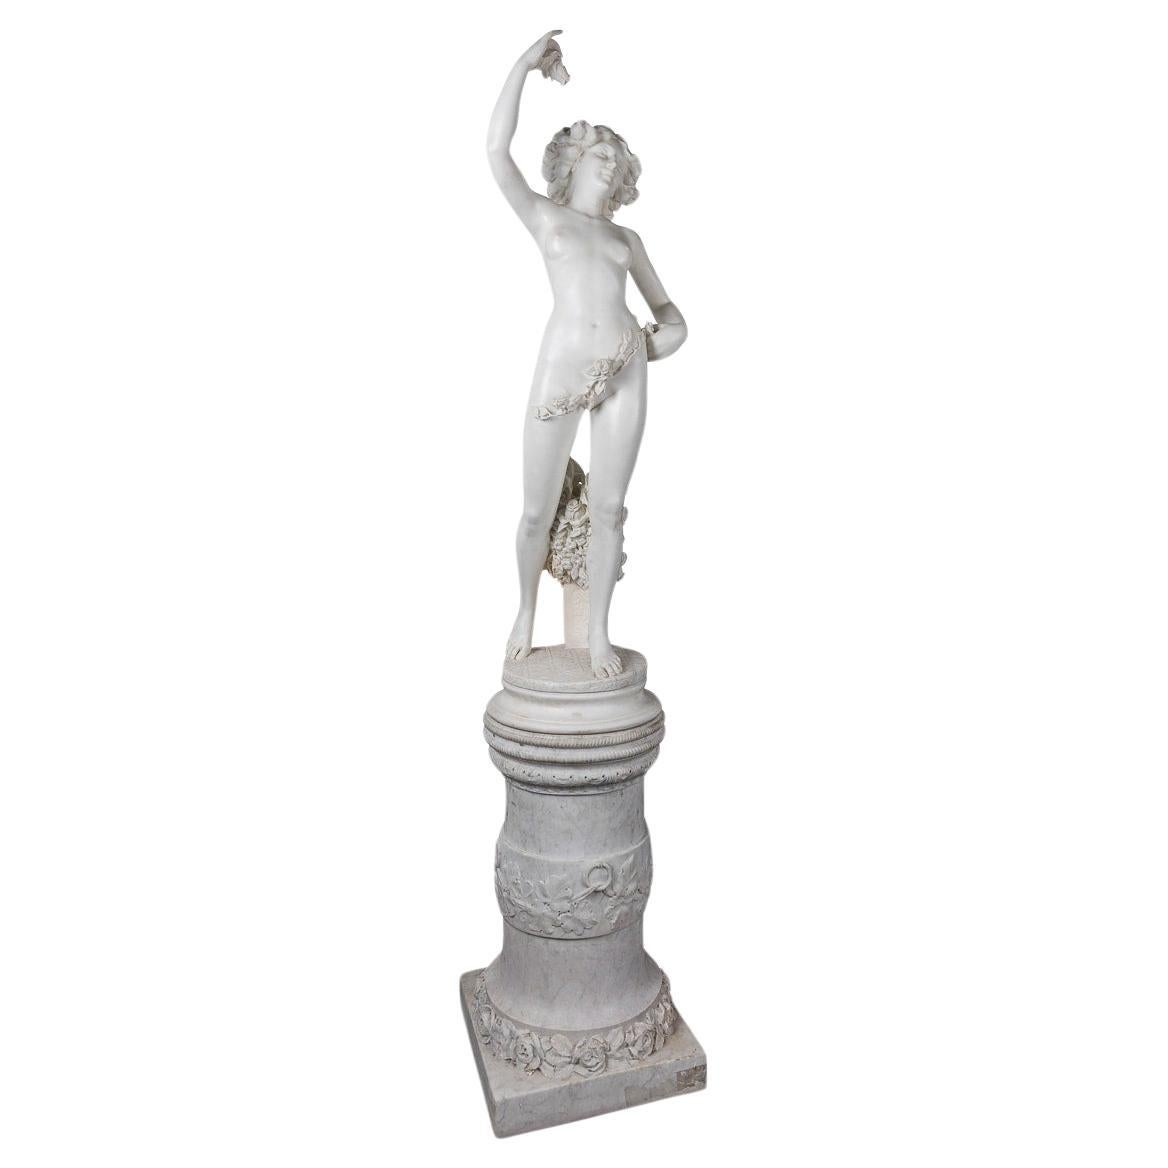 19th Century Italian Marble Figure Of A Nude, Adolfo Cipriani (1880-1930)